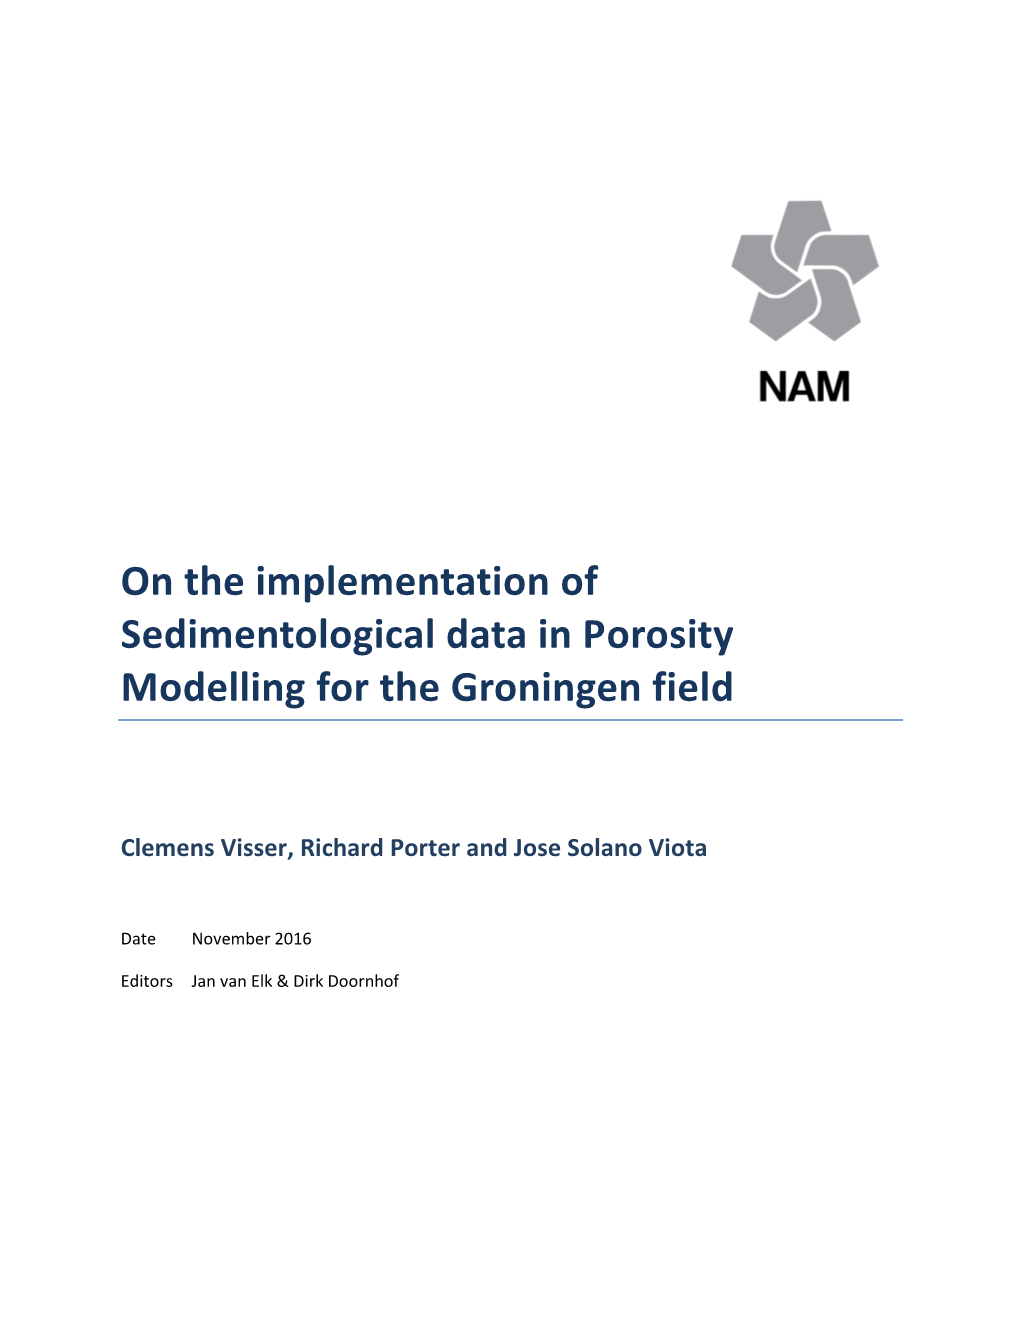 On the Implementation of Sedimentological Data in Porosity Modelling for the Groningen Field